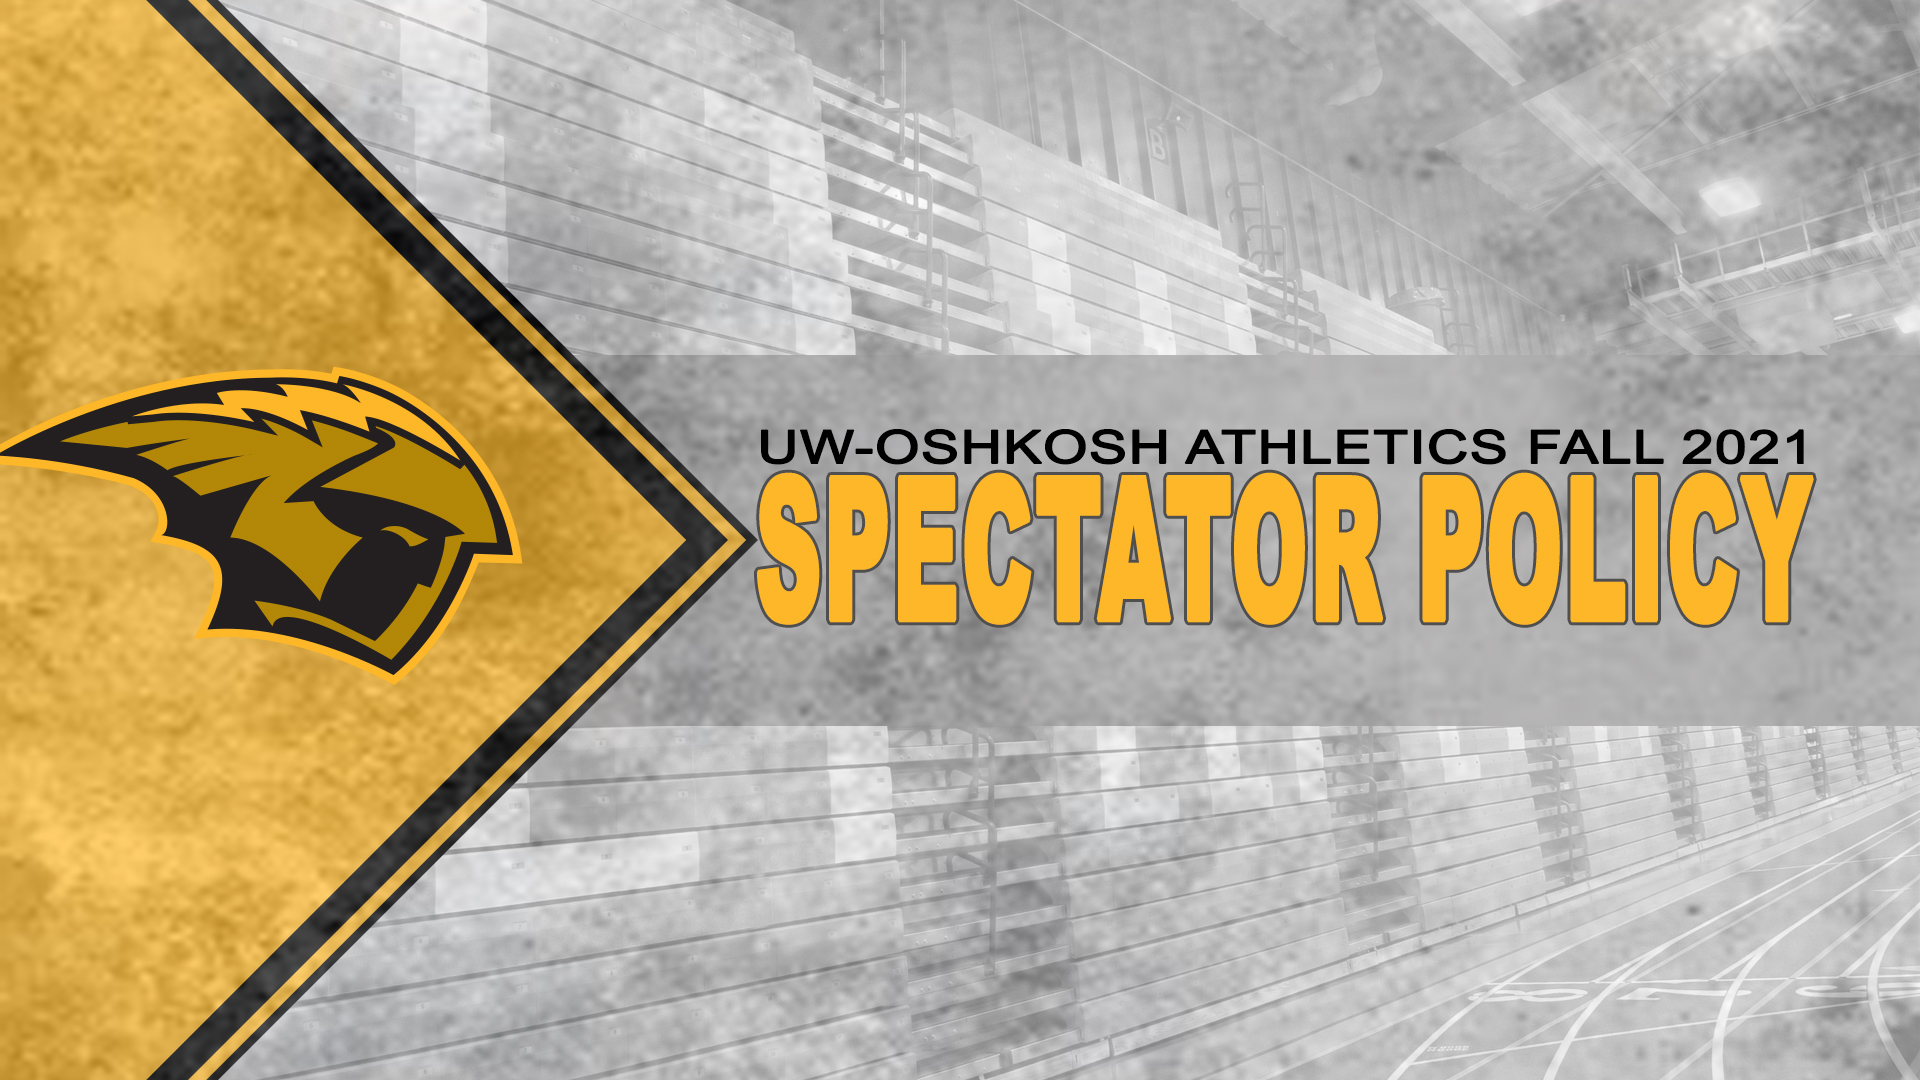 UW-Oshkosh Discloses Fall Spectator Policy